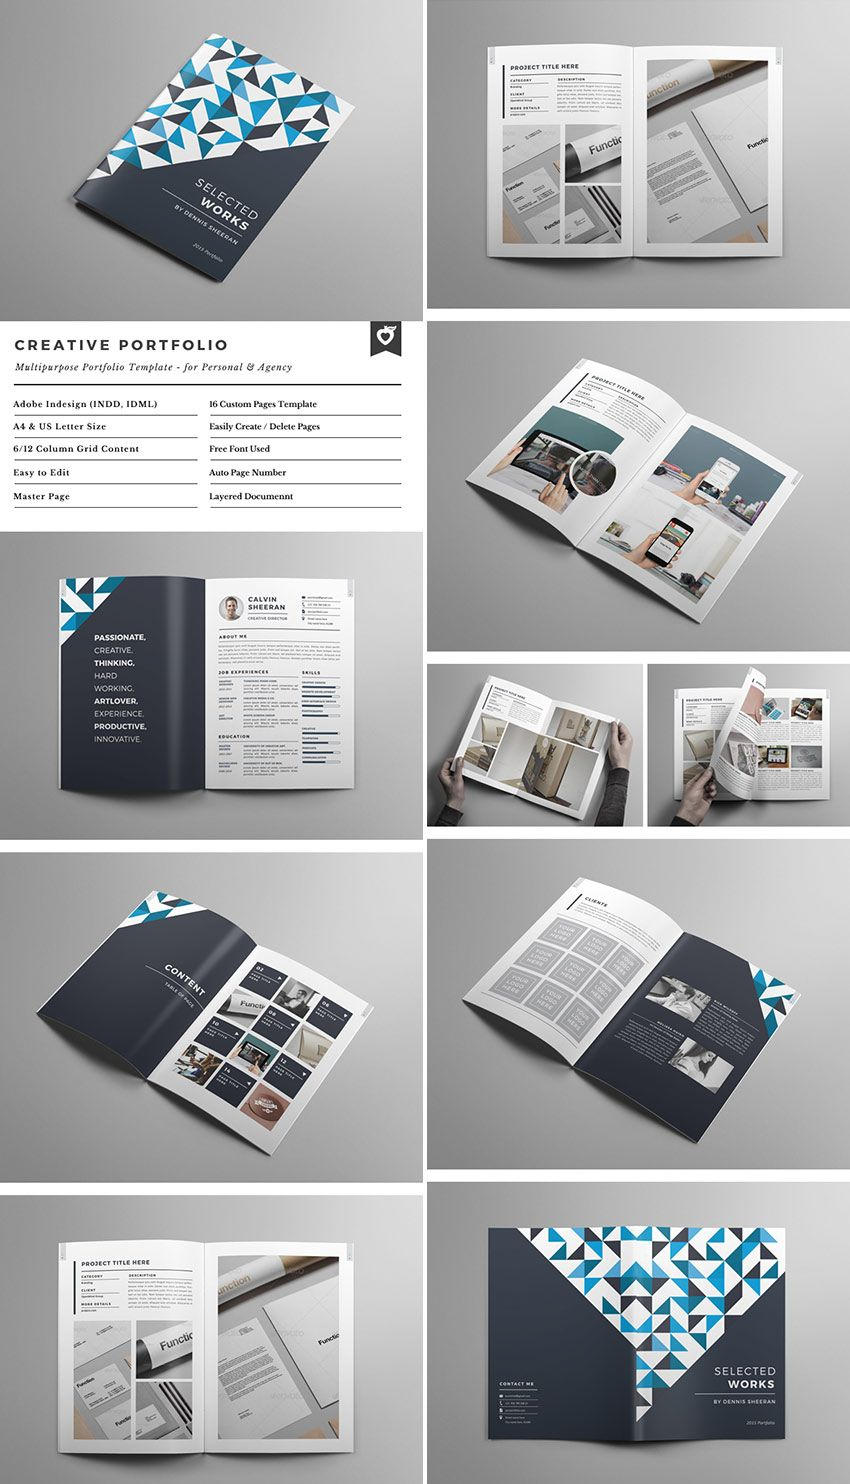 Creative Portfolio Brochure Indd | Indesign Brochure Within Adobe Indesign Brochure Templates